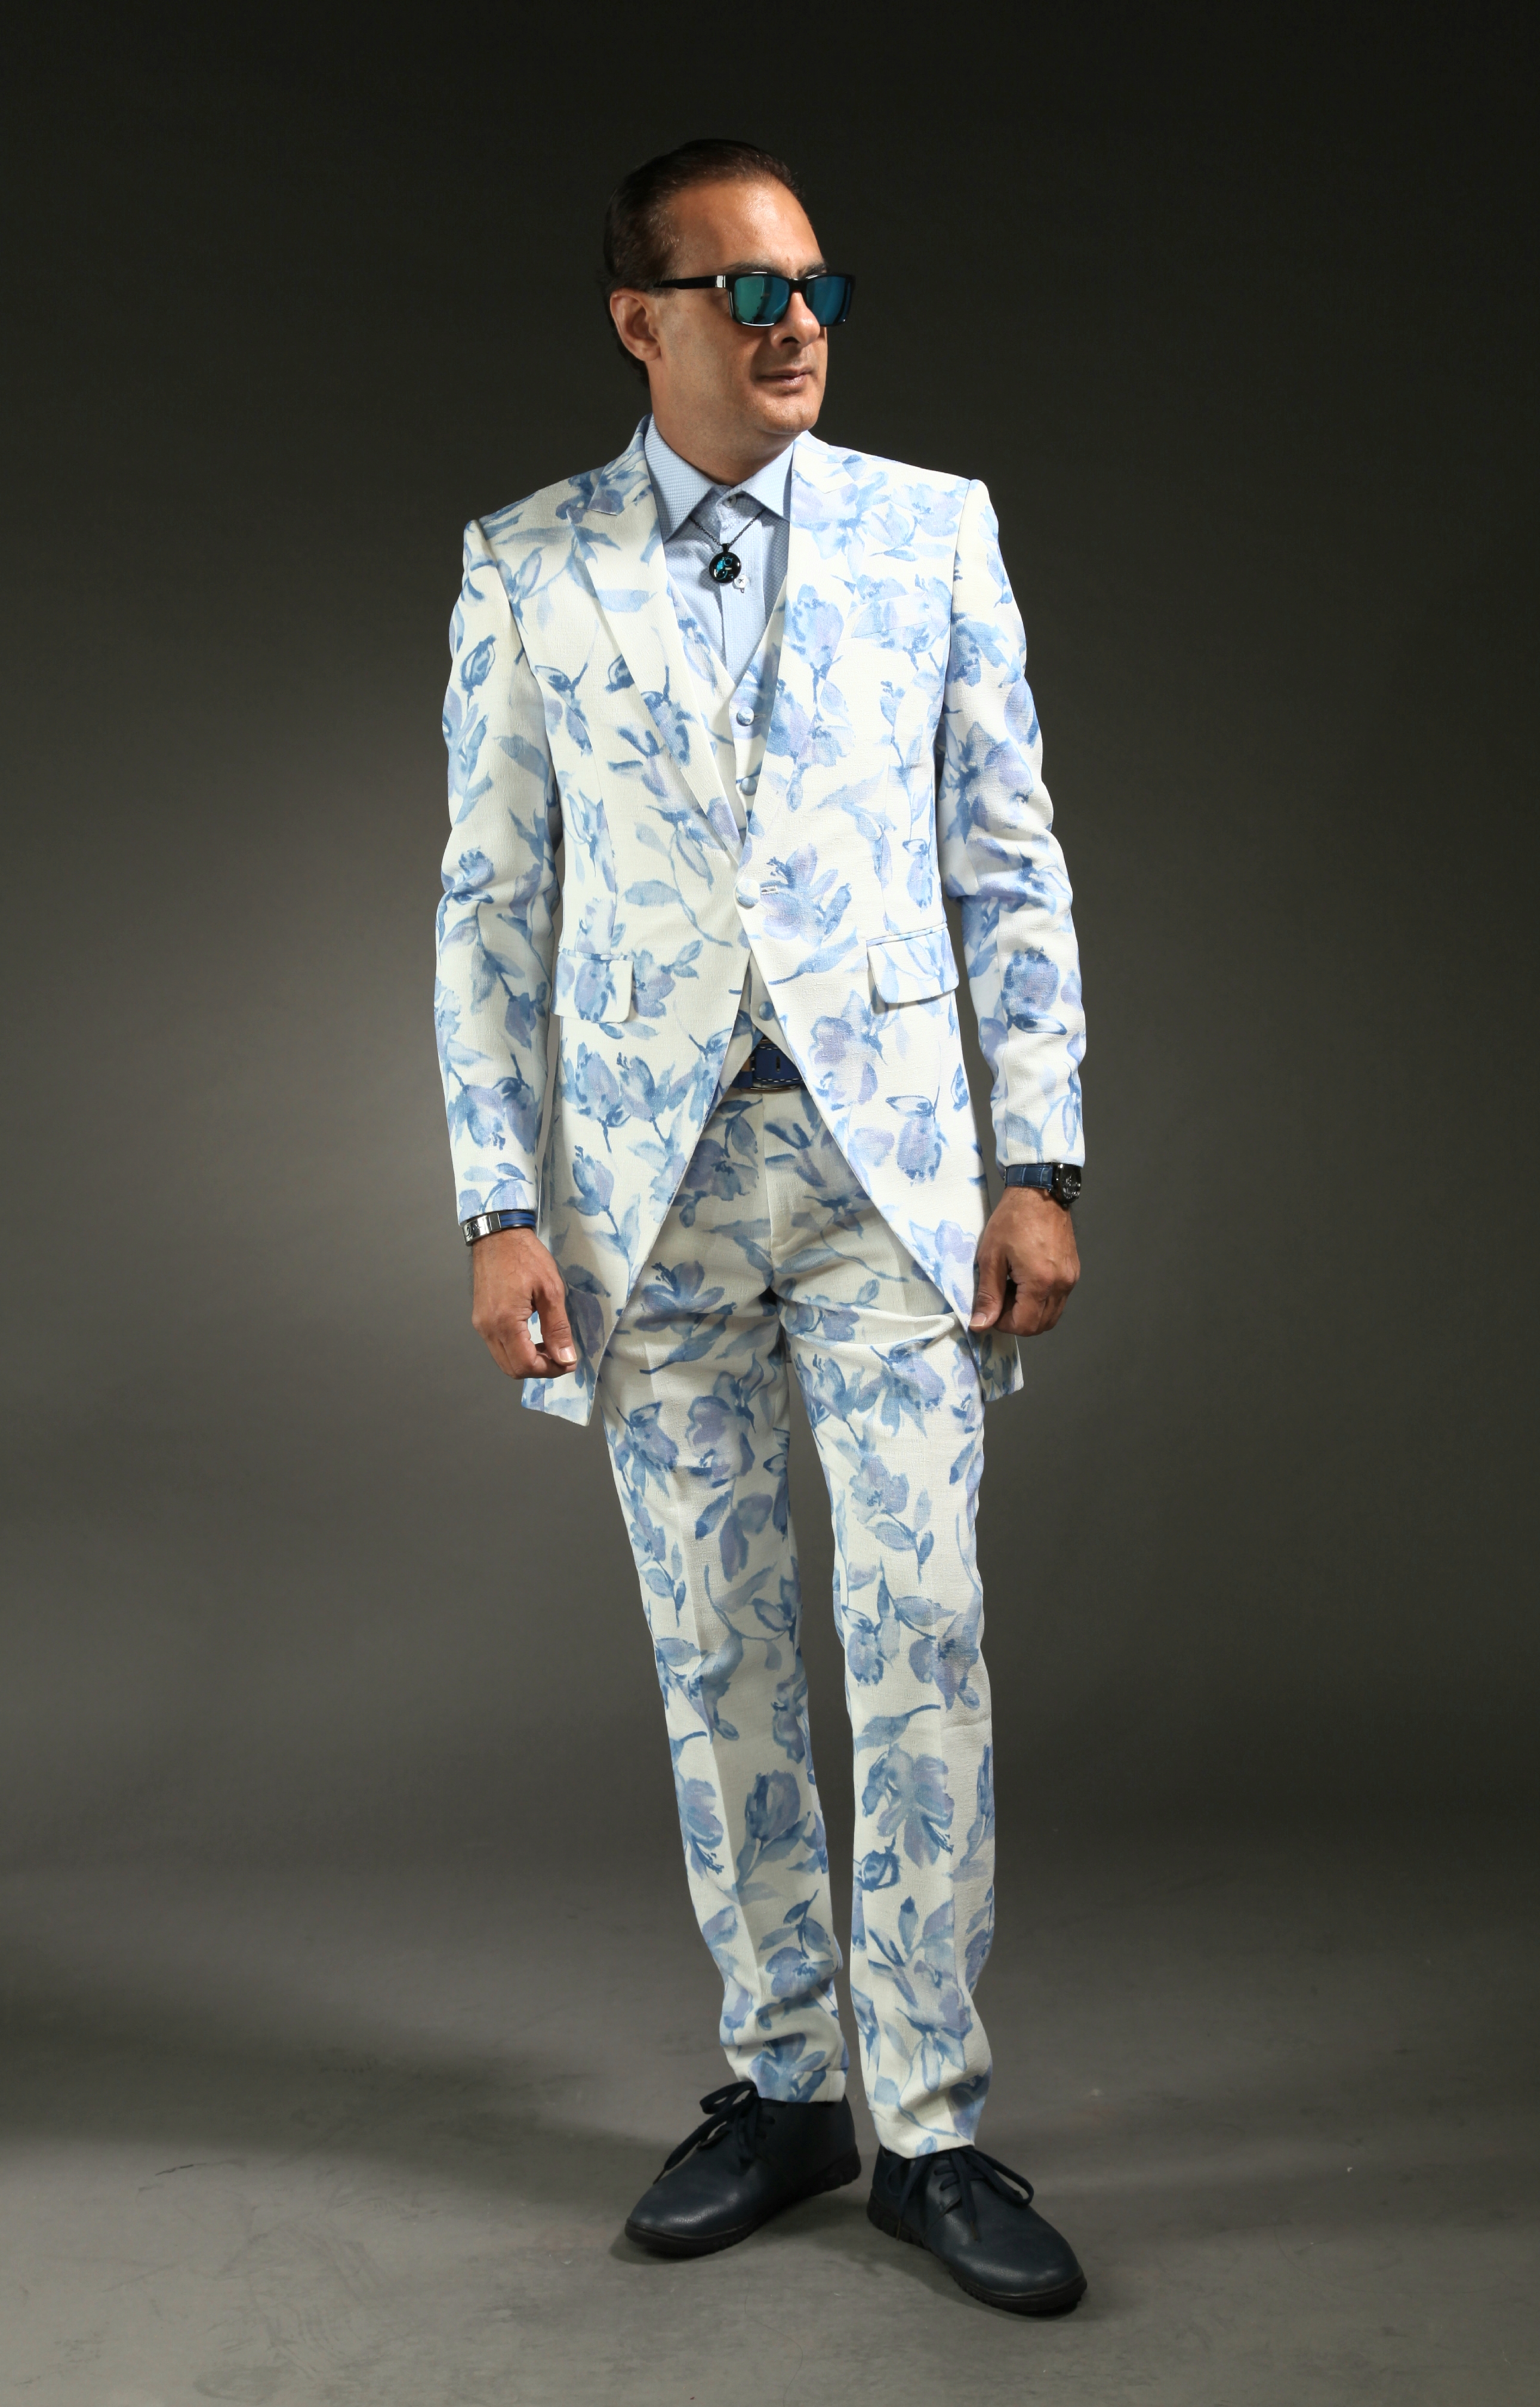 suit-rental-suits-rent-hire-designer-my-singapore-tailor-tailors-rentals-shop-tuxedo-black-tie-wedding-formal-55